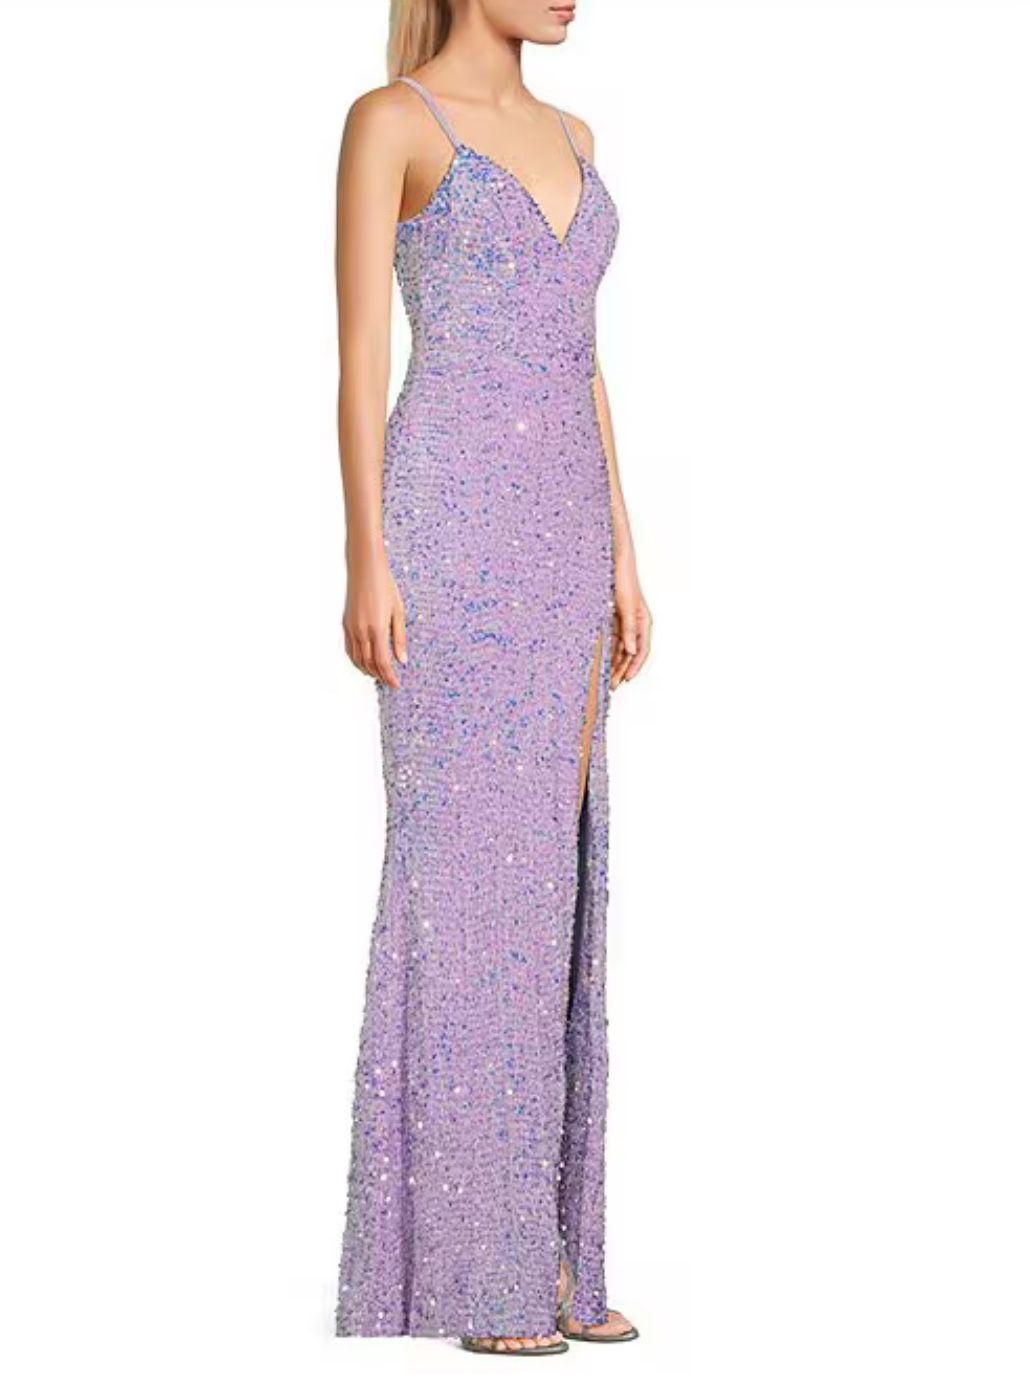 Sparkly Light Purple Prom Dress